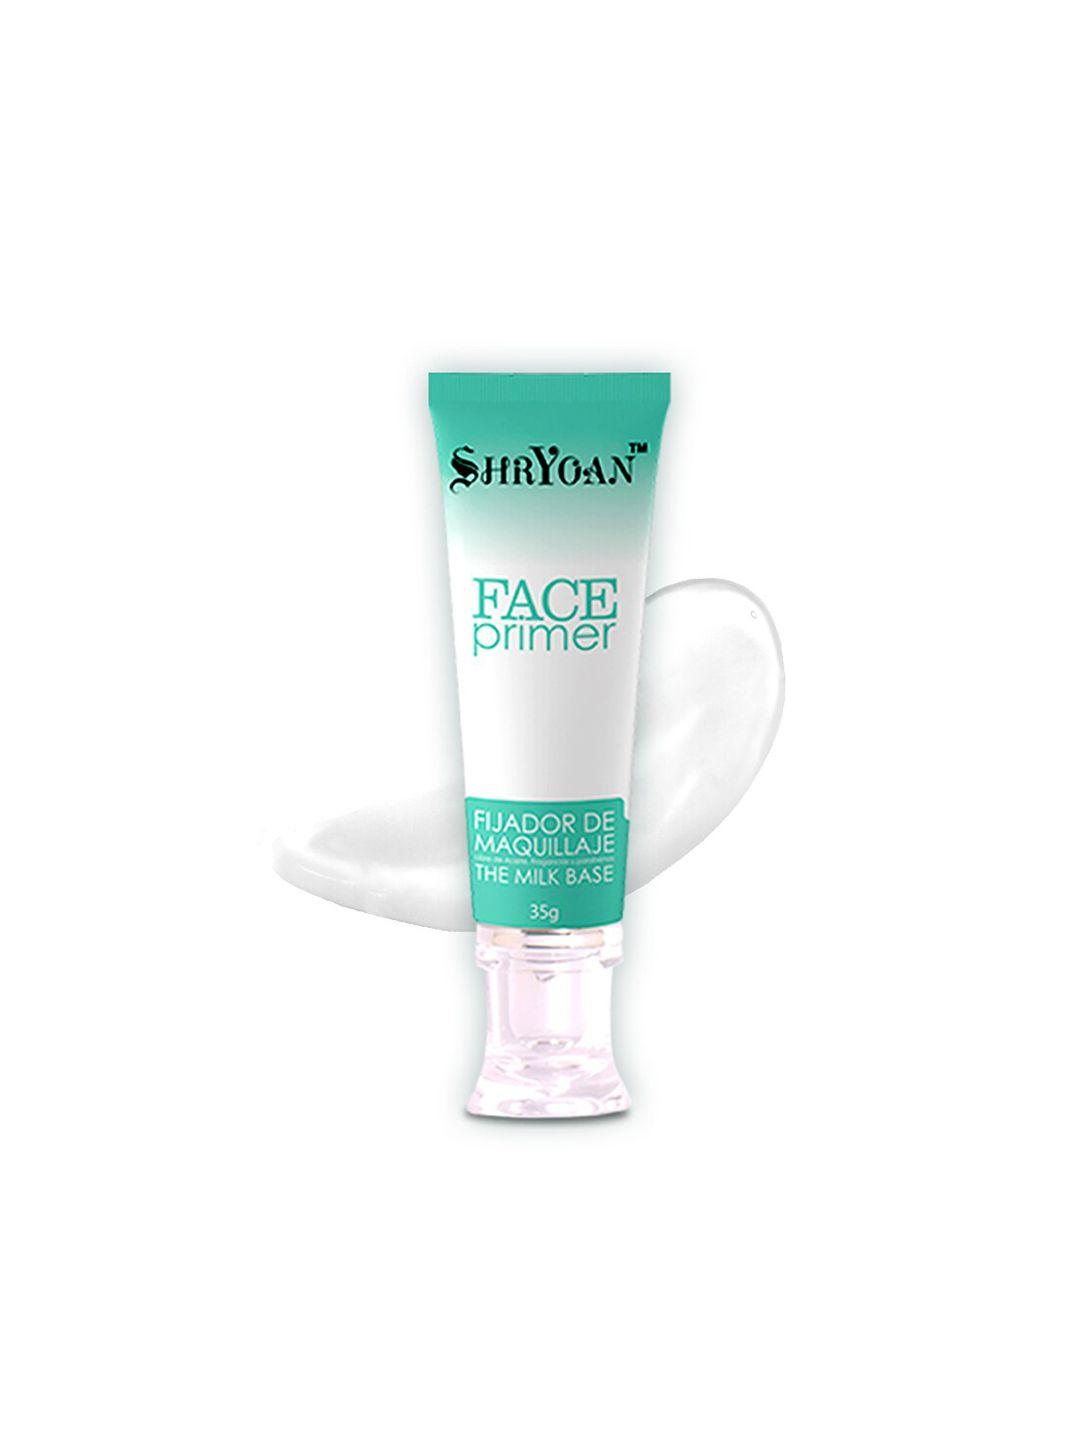 shryoan milk base makeup face primer